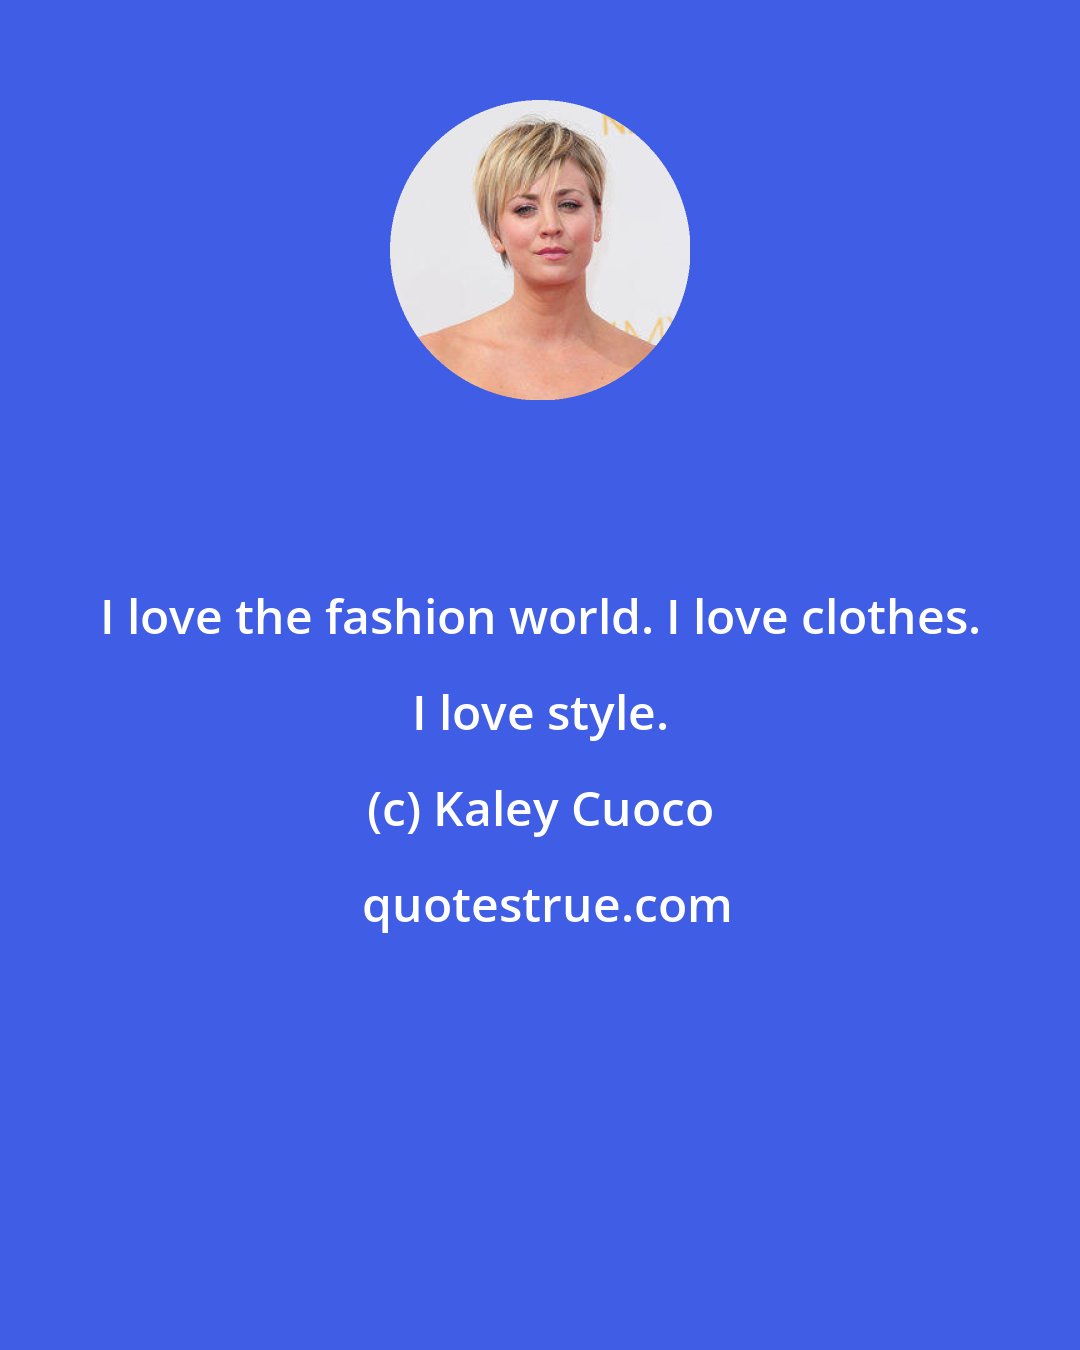 Kaley Cuoco: I love the fashion world. I love clothes. I love style.